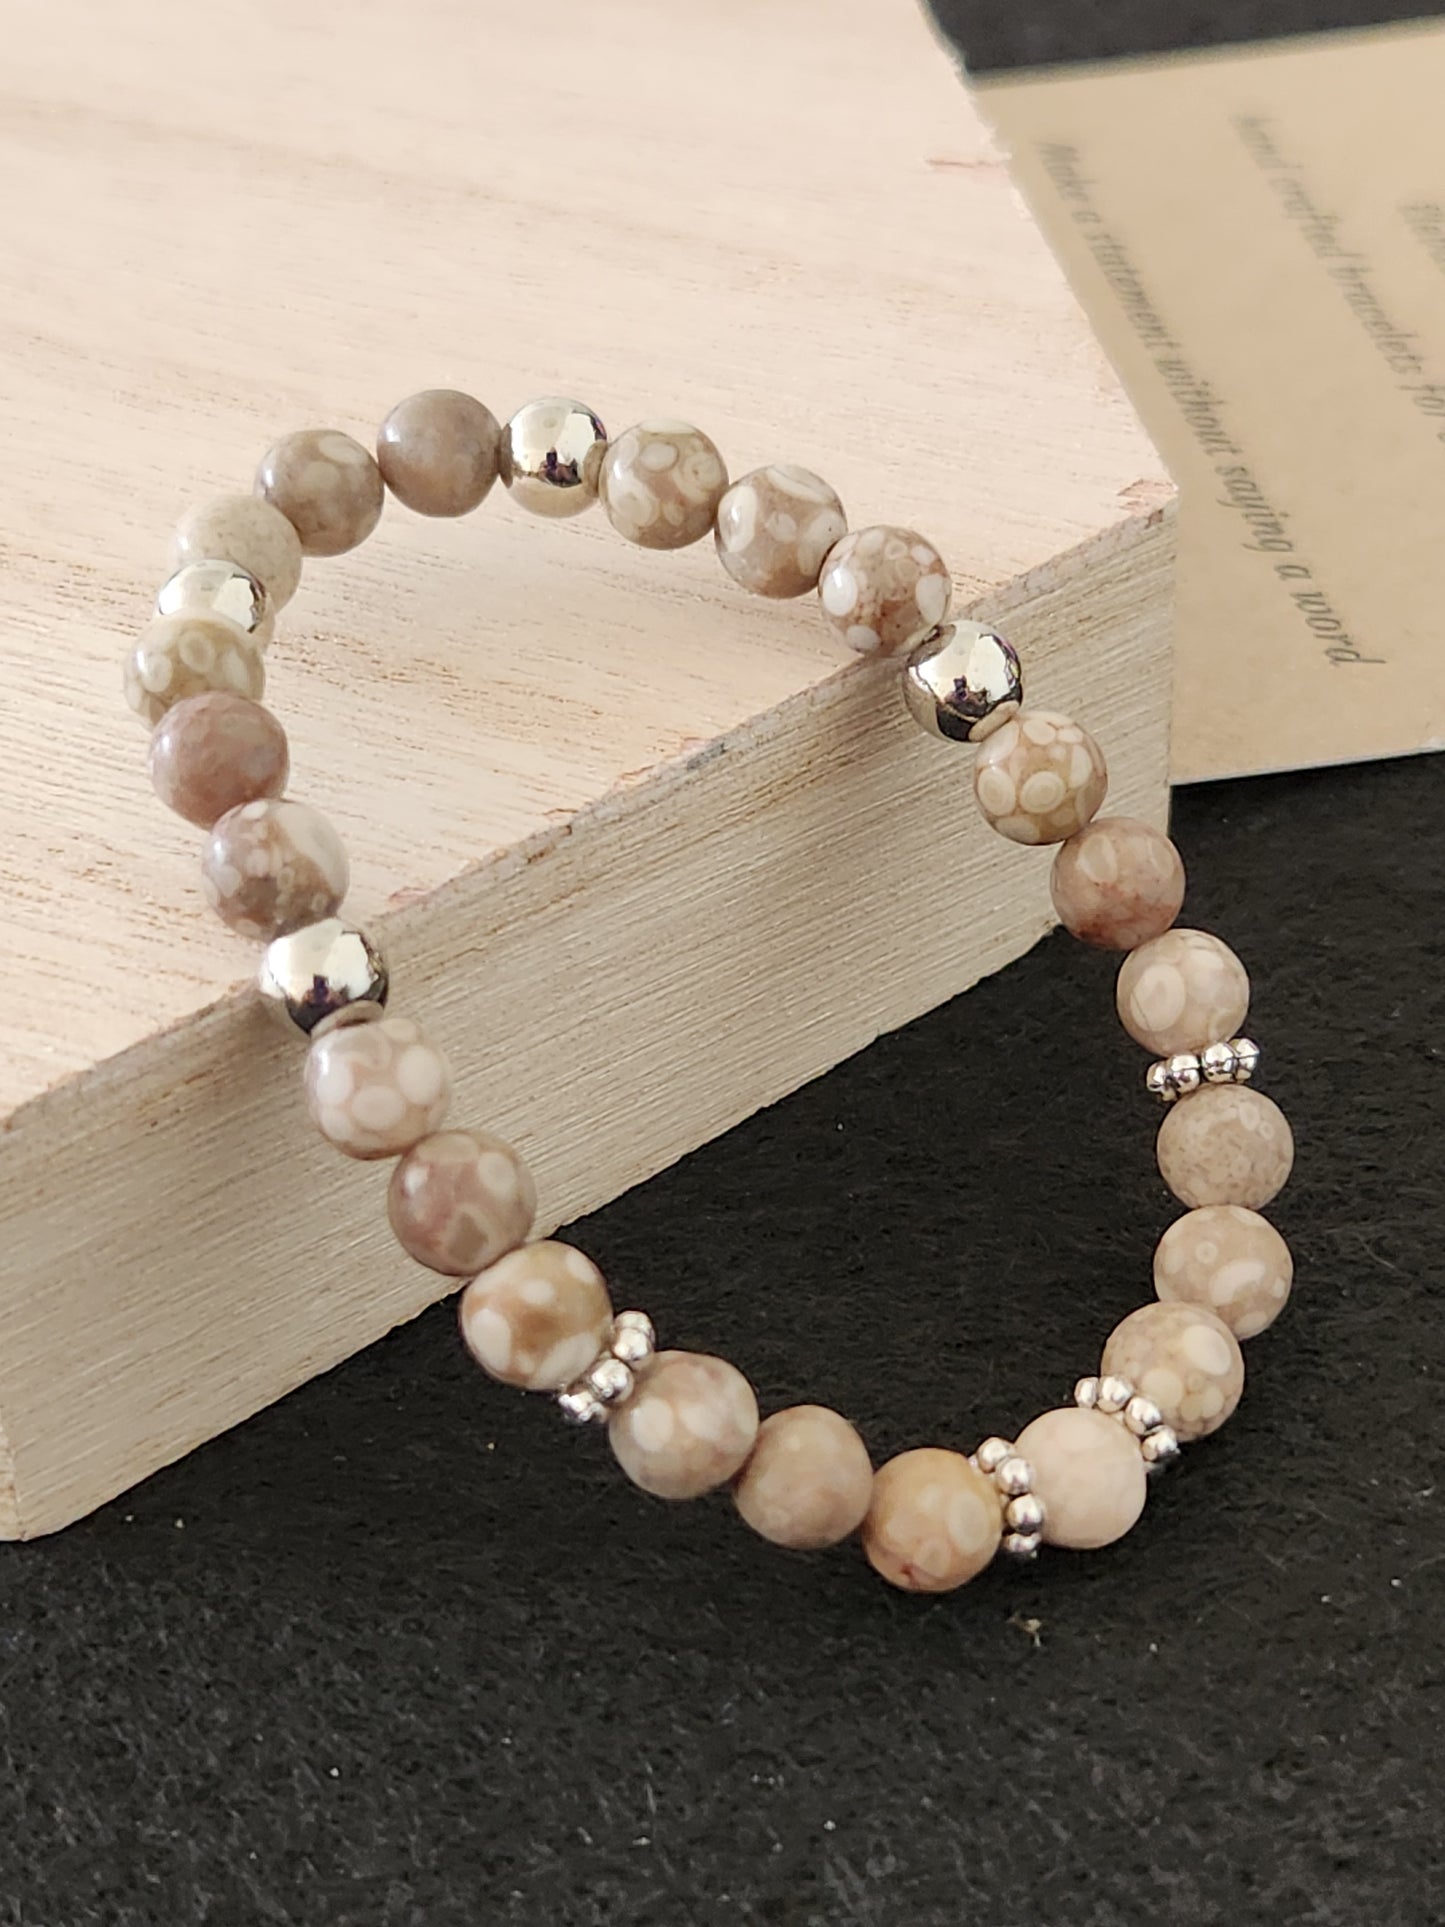 Maifanite Stone Bracelet - 6mm stones - revitalization - healing - peace - luck